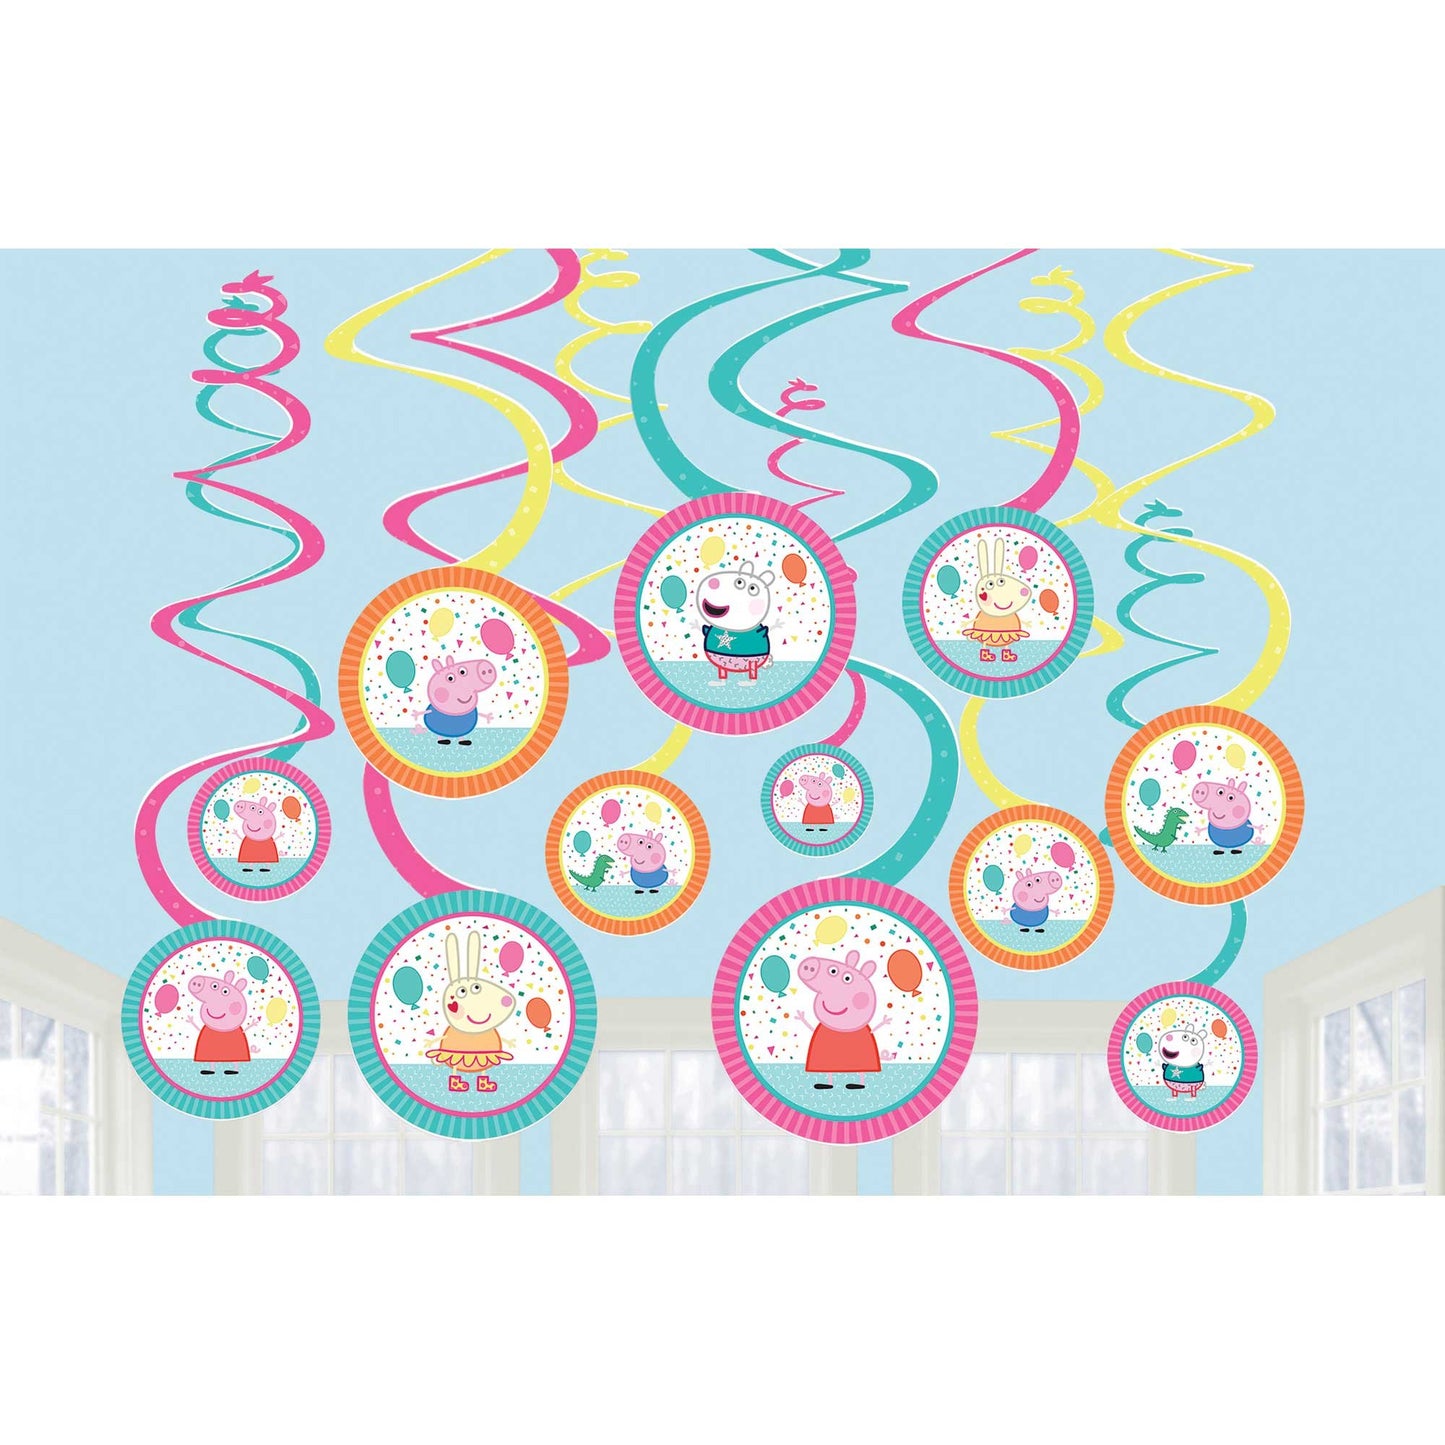 Peppa Pig Confetti Party Spiral Swirls Hanging Decorations